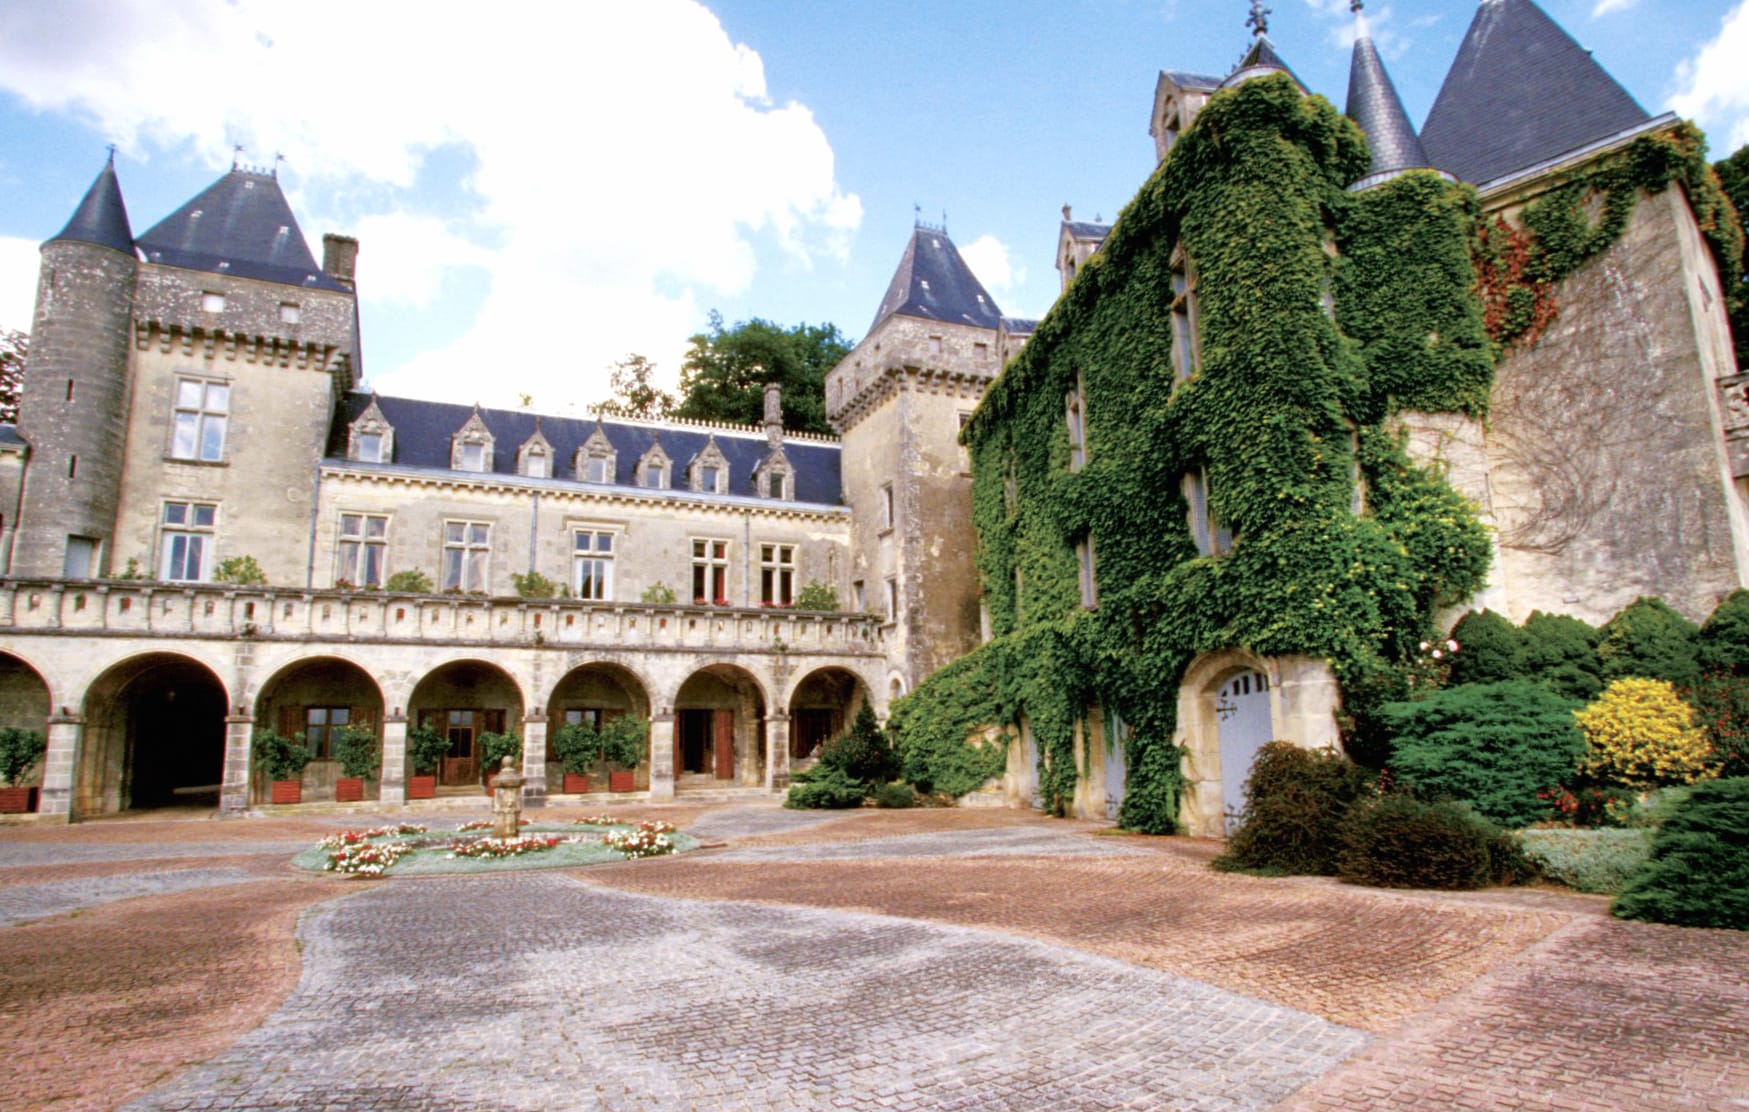 Chateau de La Riviere-Bourdet at 1334 x 750 iPhone 7 size wallpapers HD quality